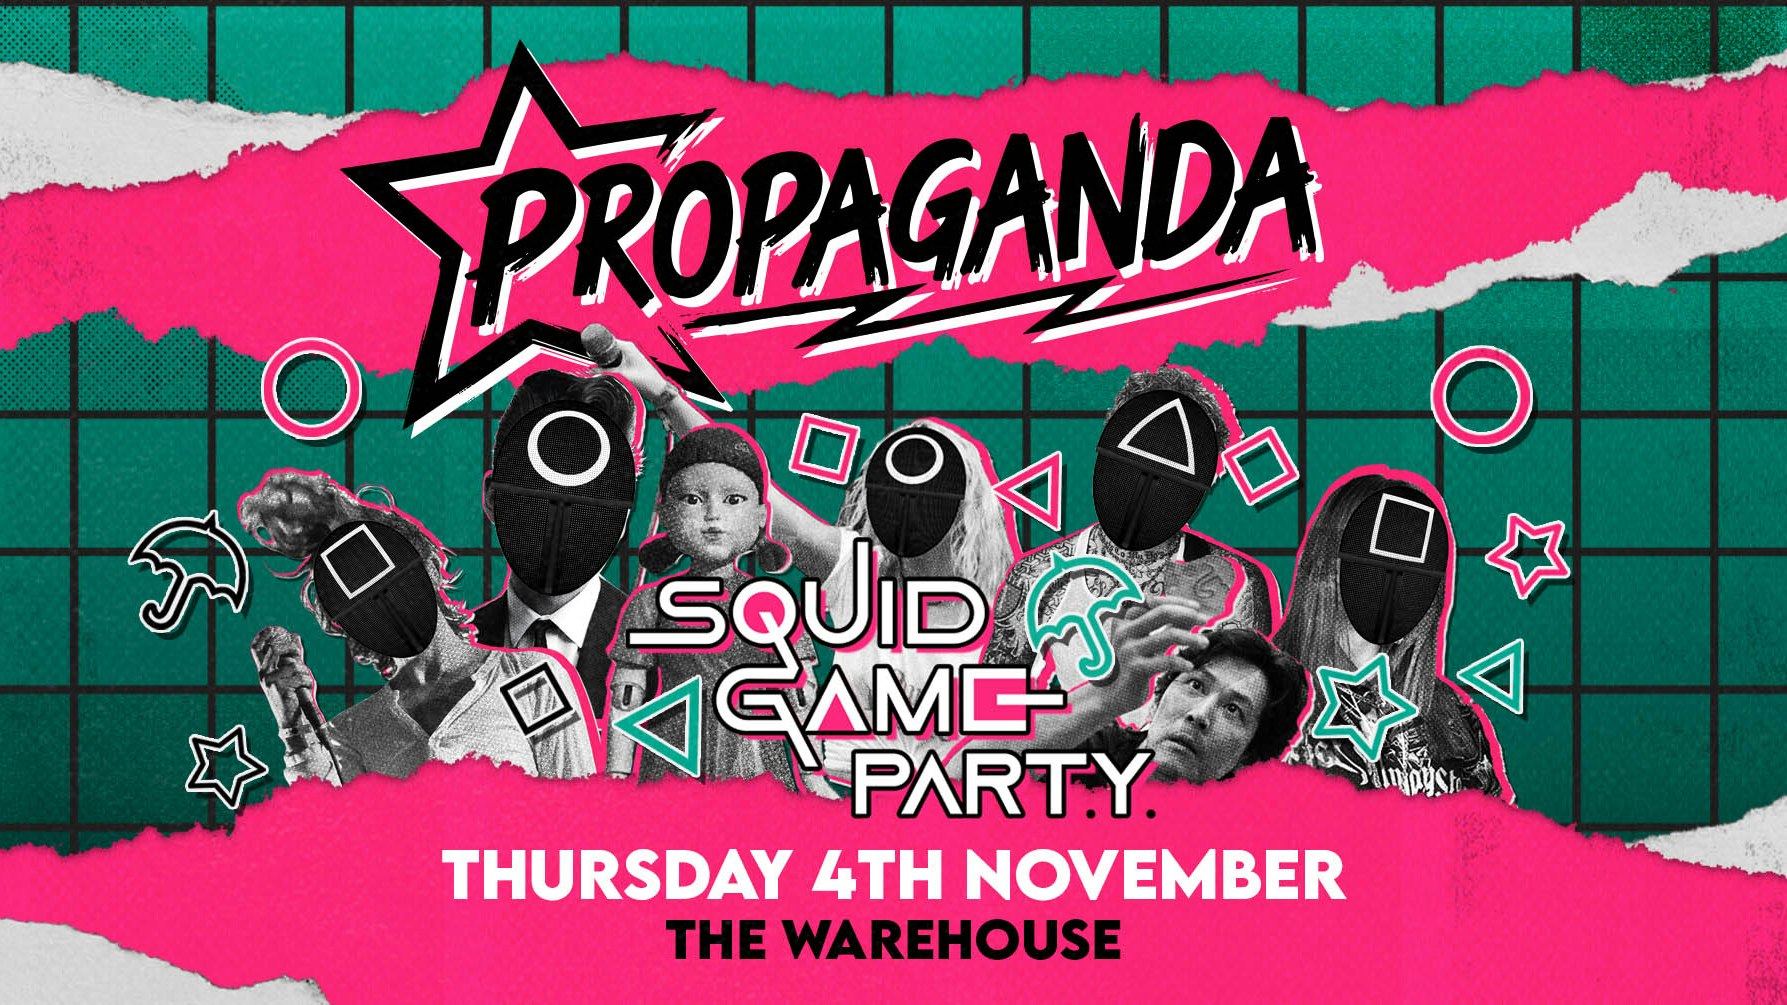 Propaganda Leeds – Squid Game Party!